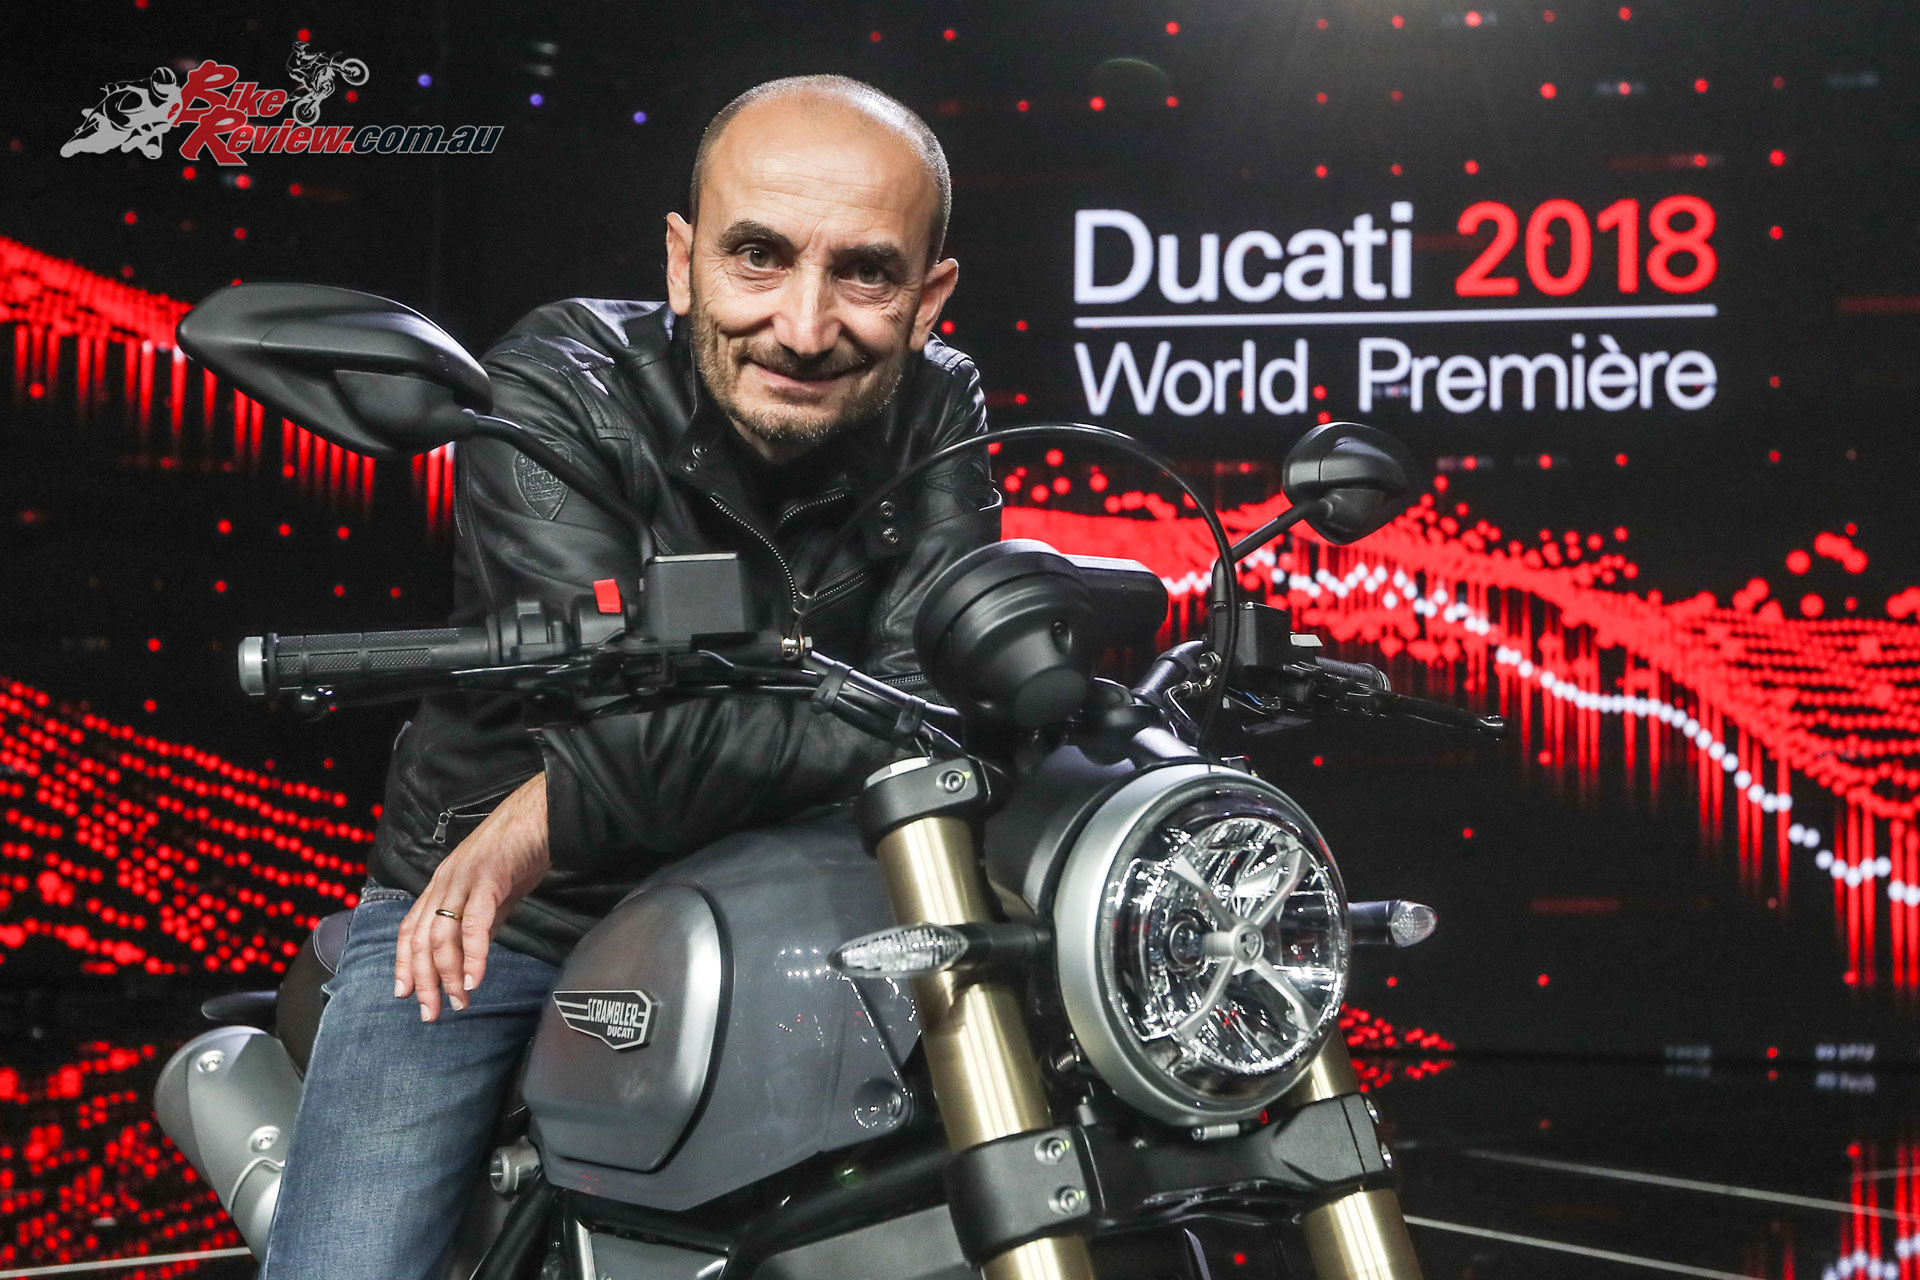 Ducati World Premiere 2018 - Ducati Scrambler 1100